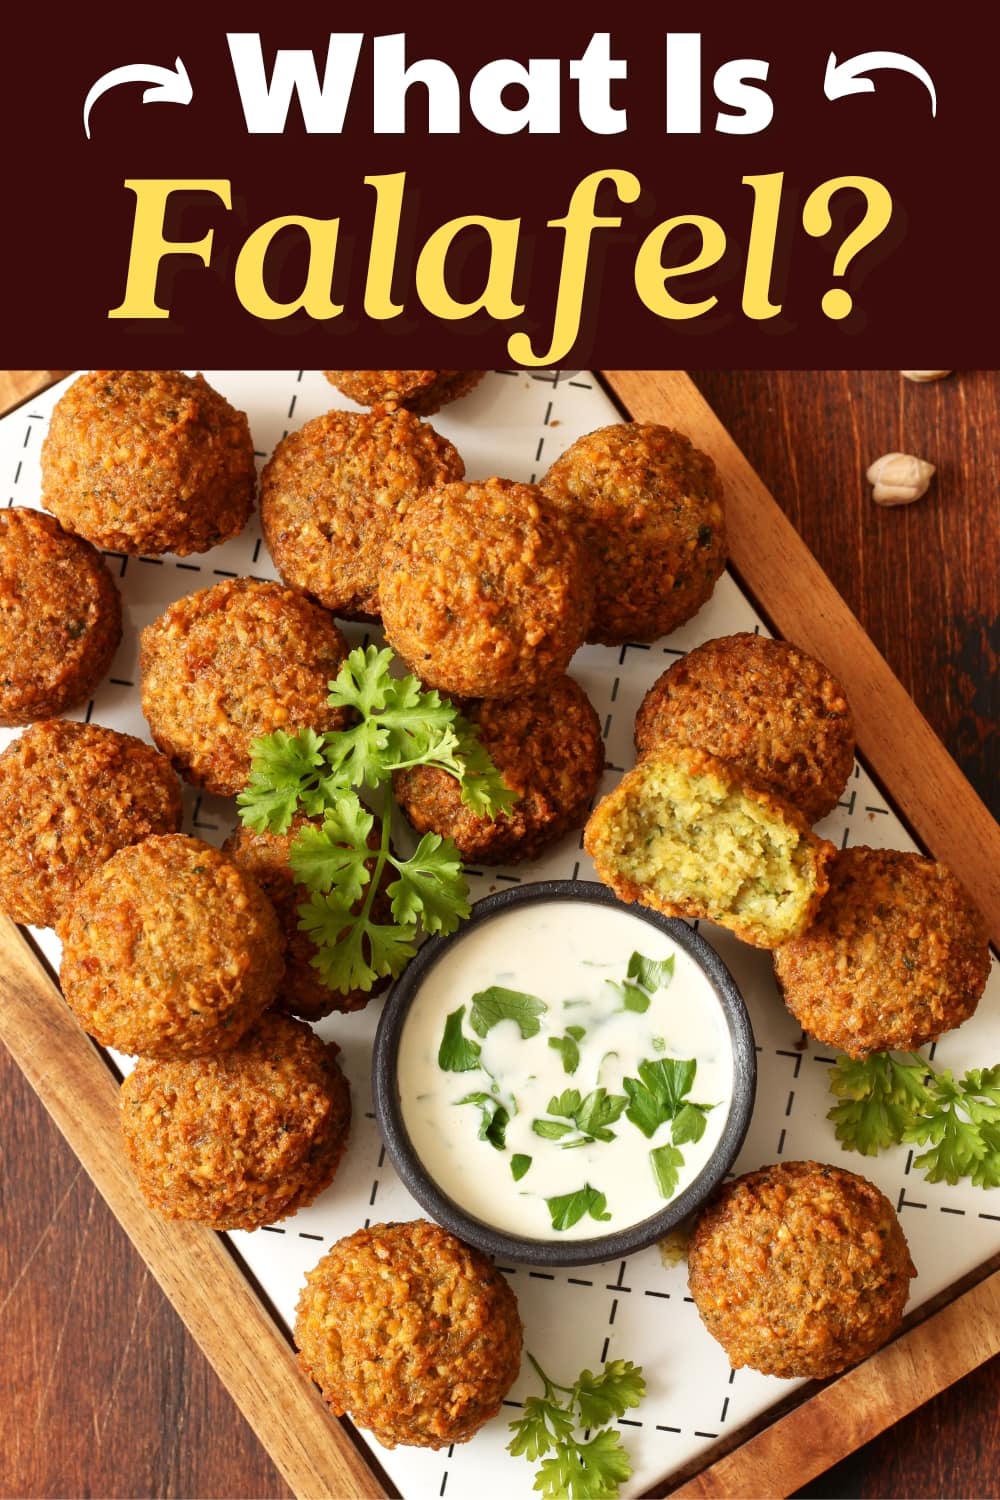 What is Falafel?